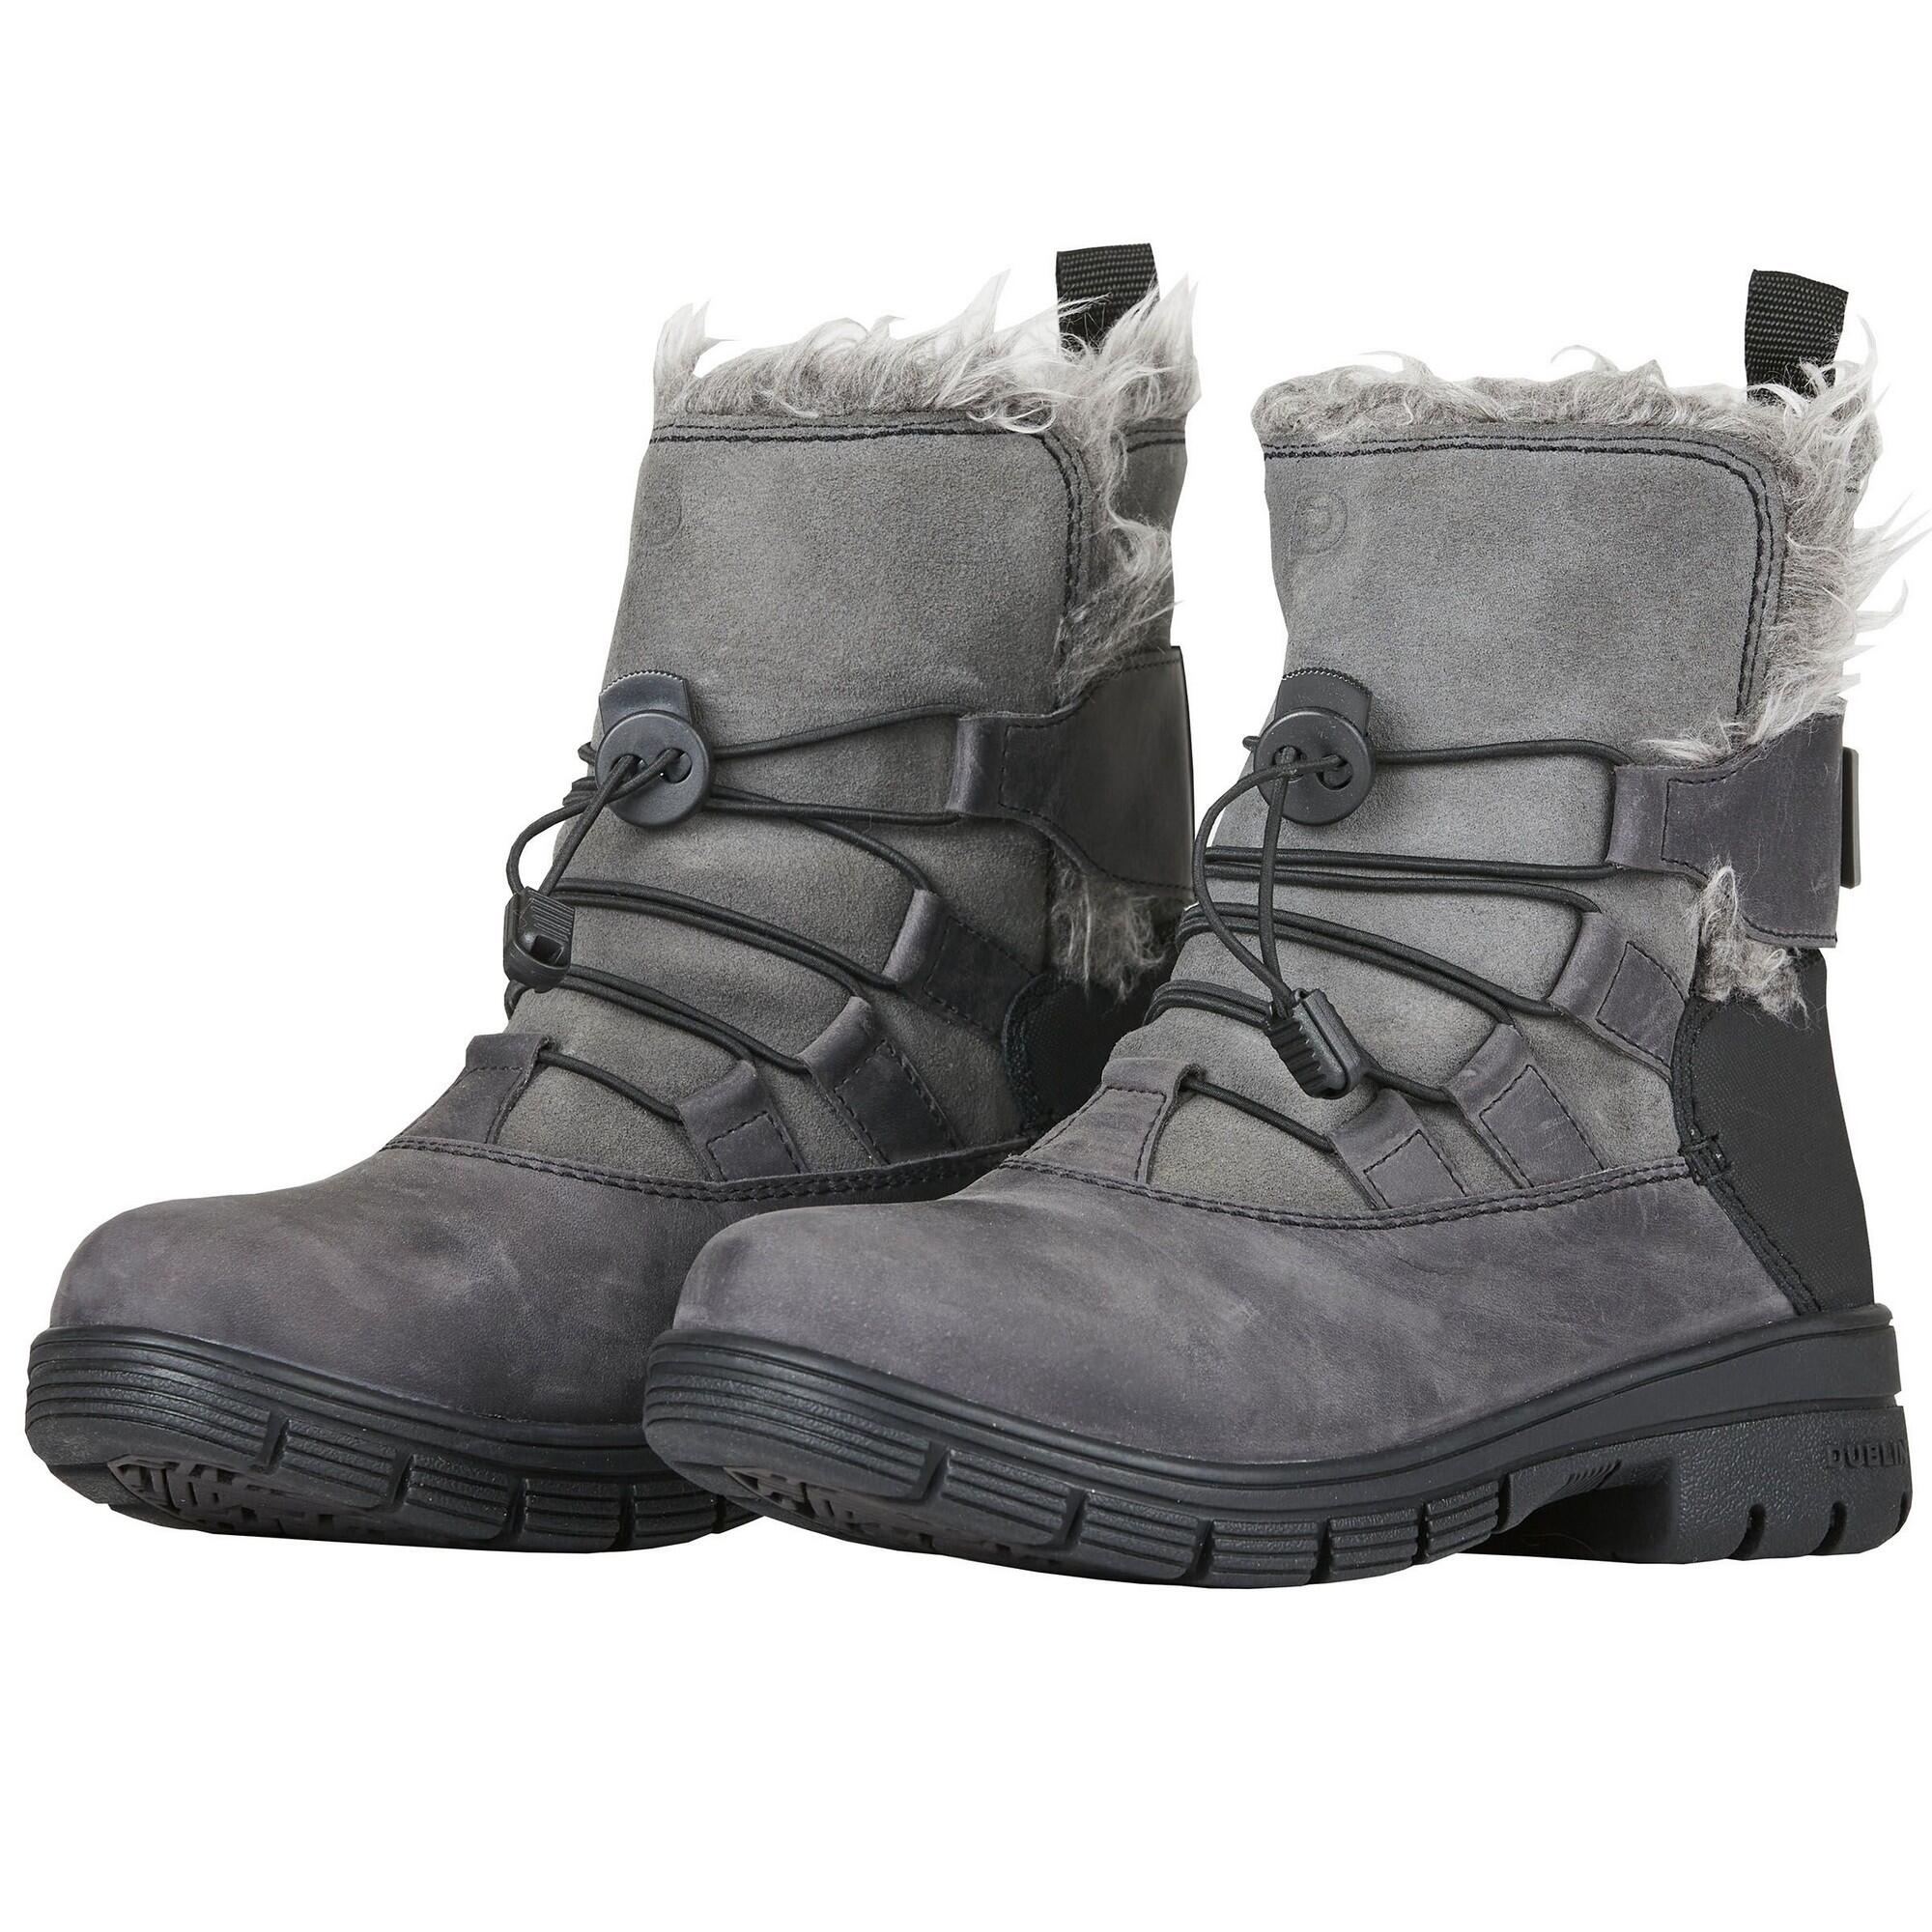 DUBLIN Unisex Adult Boyne Leather Country Boots (Grey)